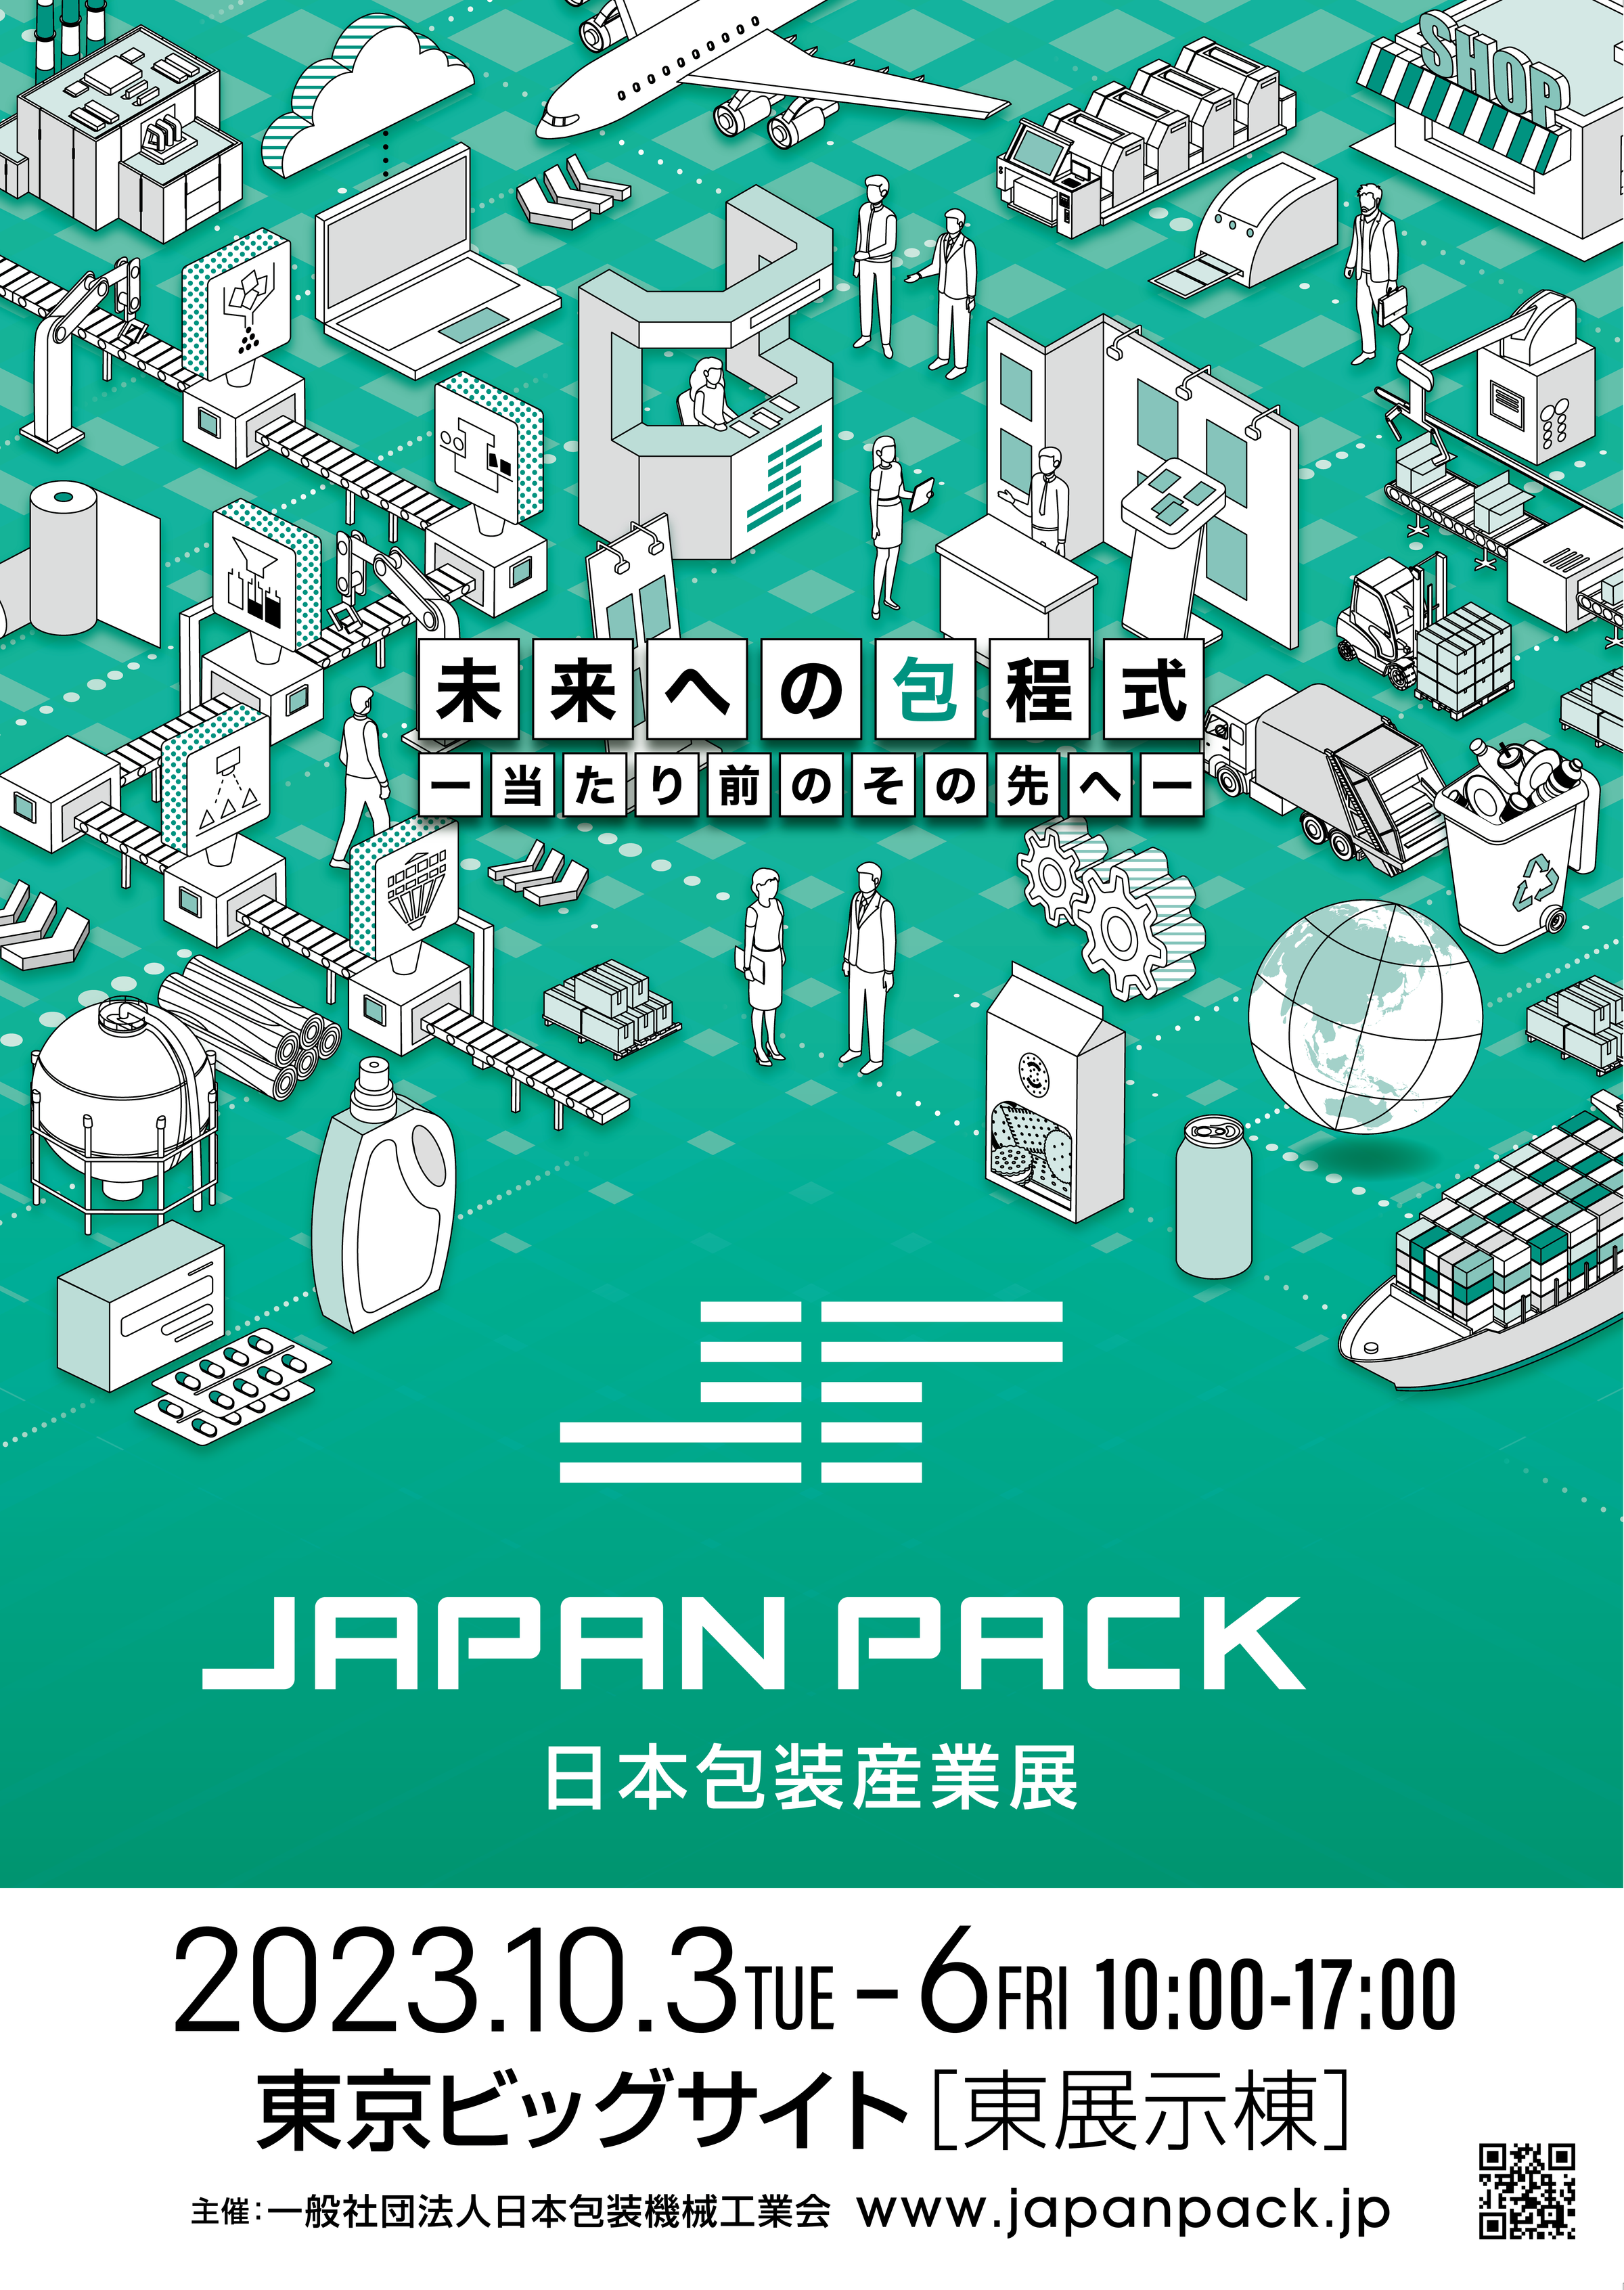 【JAPAN PACK】『未来への包程式-当たり前のその先へ』をメインテーマに400を超える出展～10月3日～6日、東京ビッグサイト